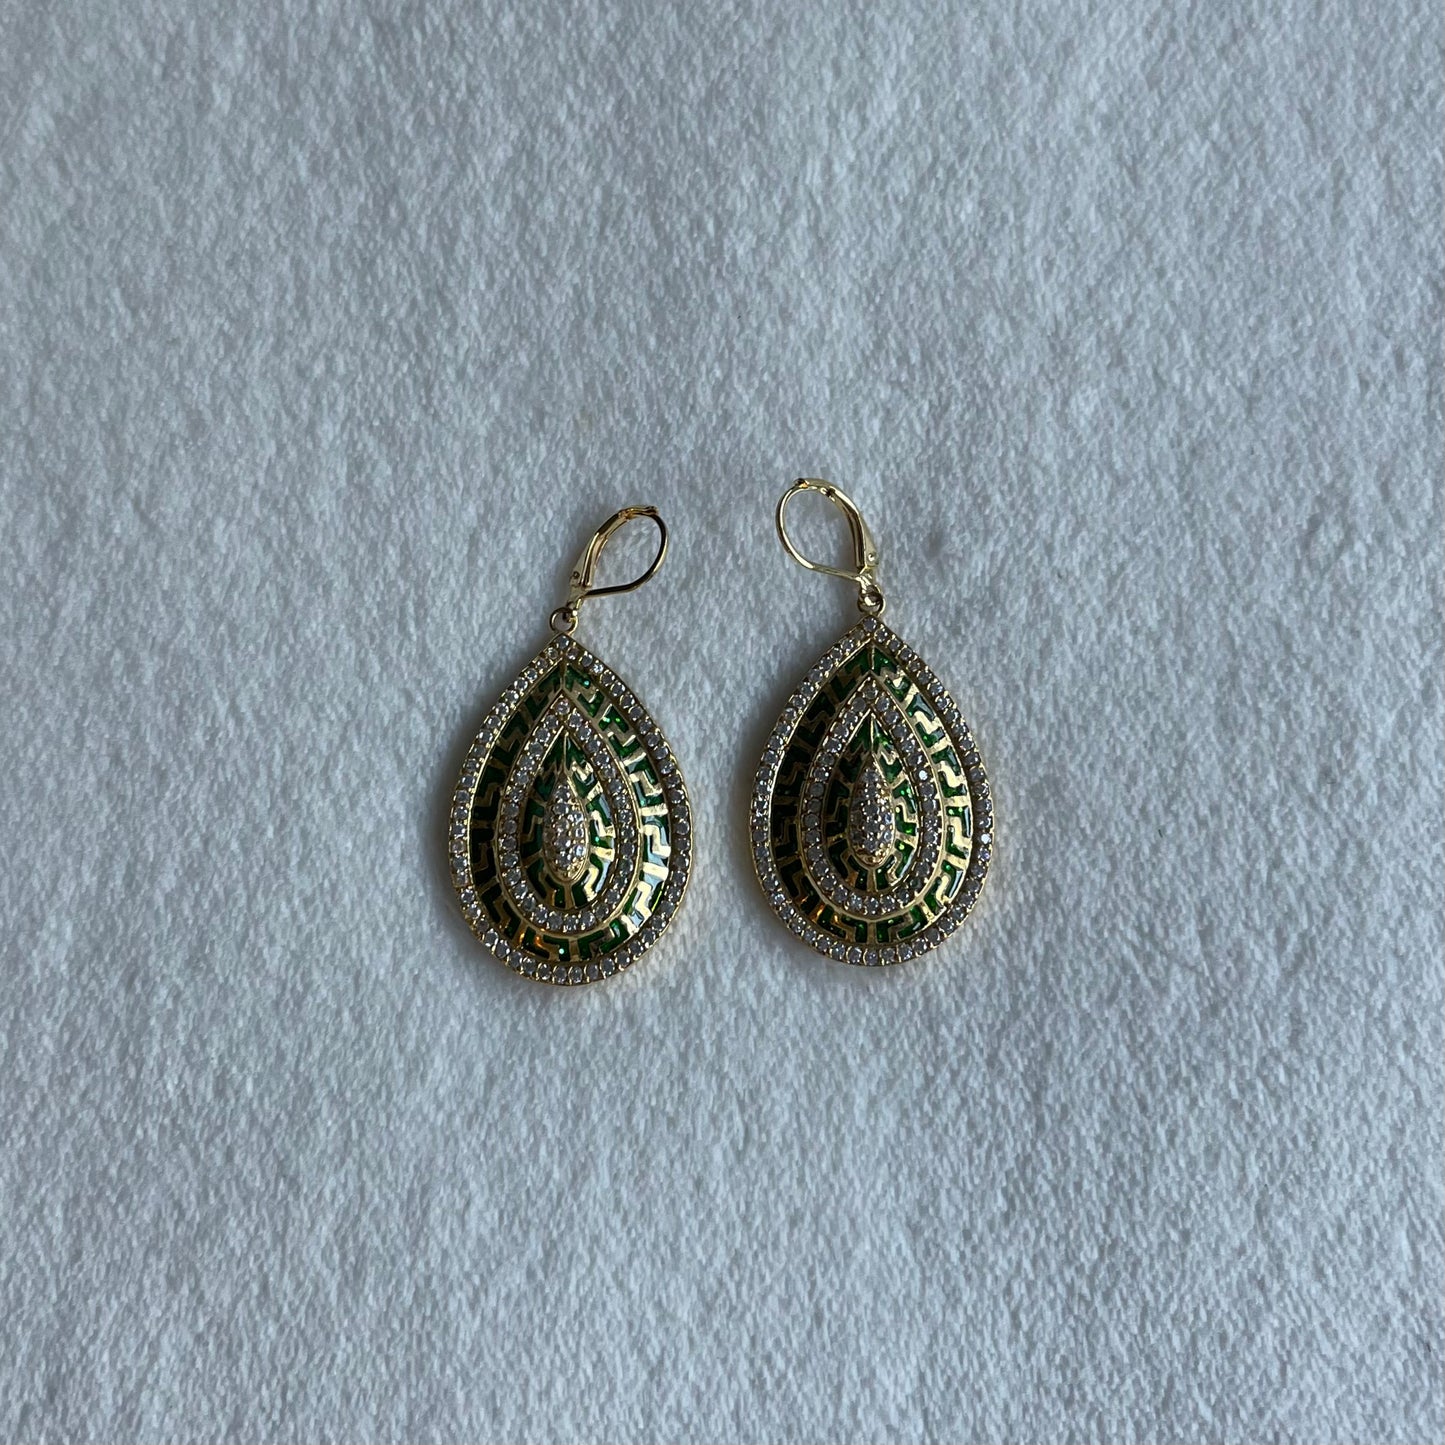 Handmade Authentic Turkish Earrings